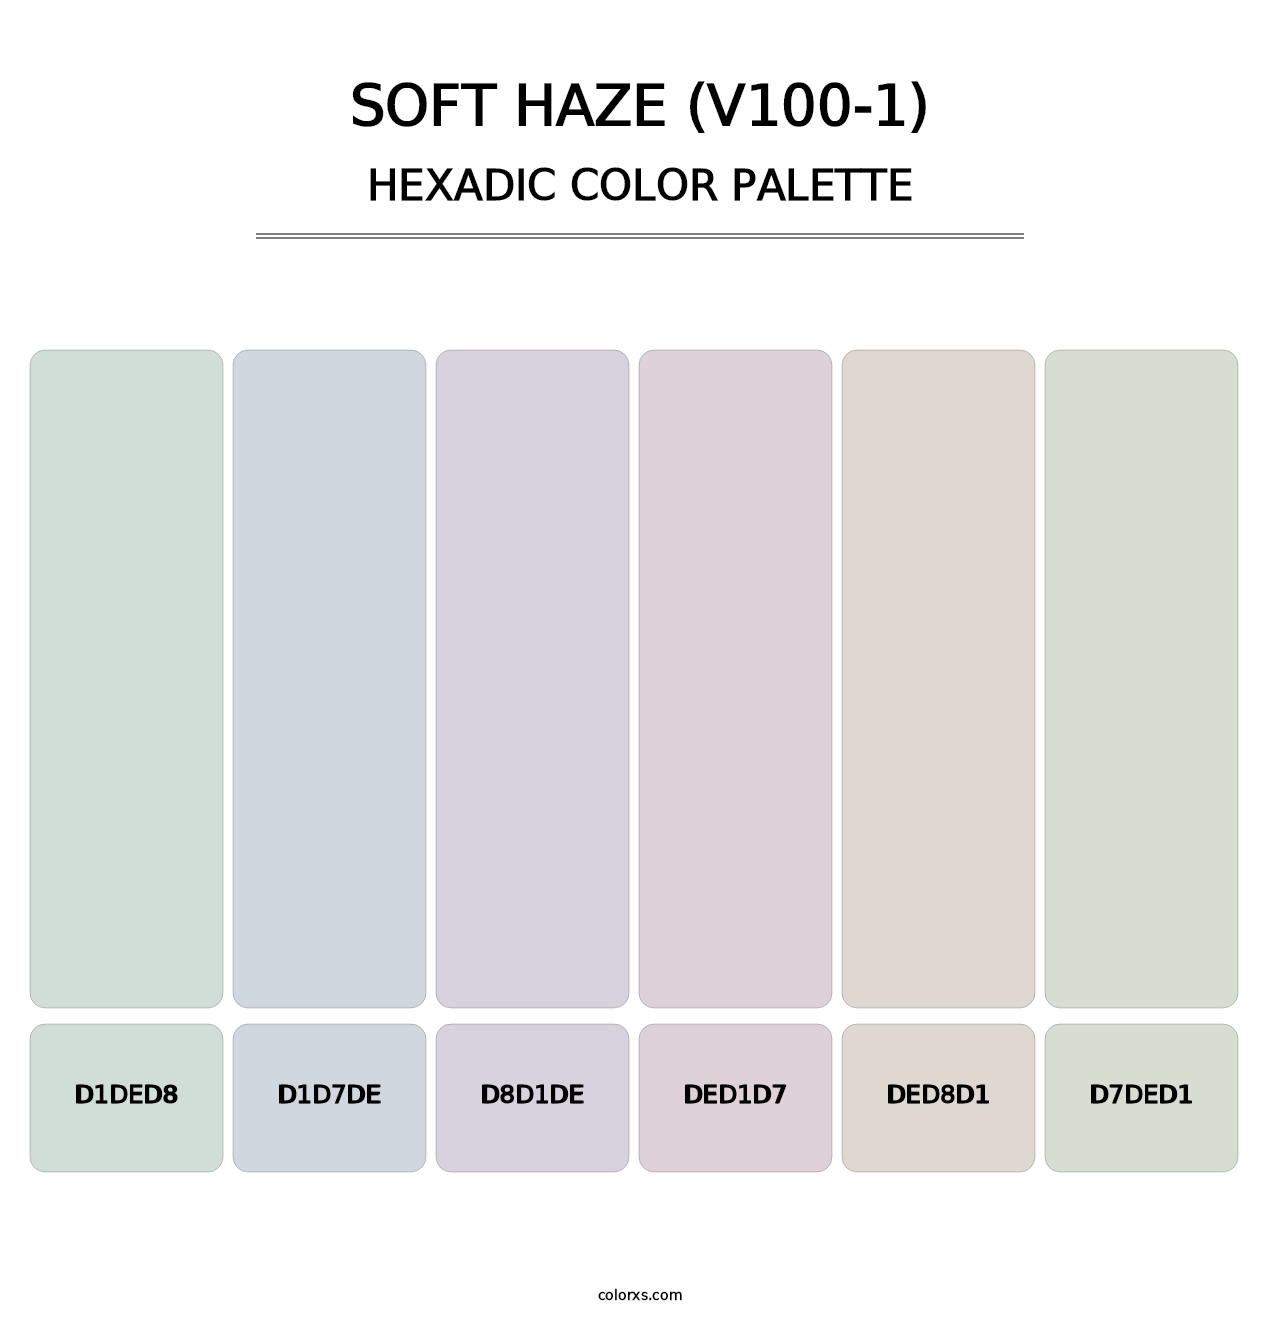 Soft Haze (V100-1) - Hexadic Color Palette